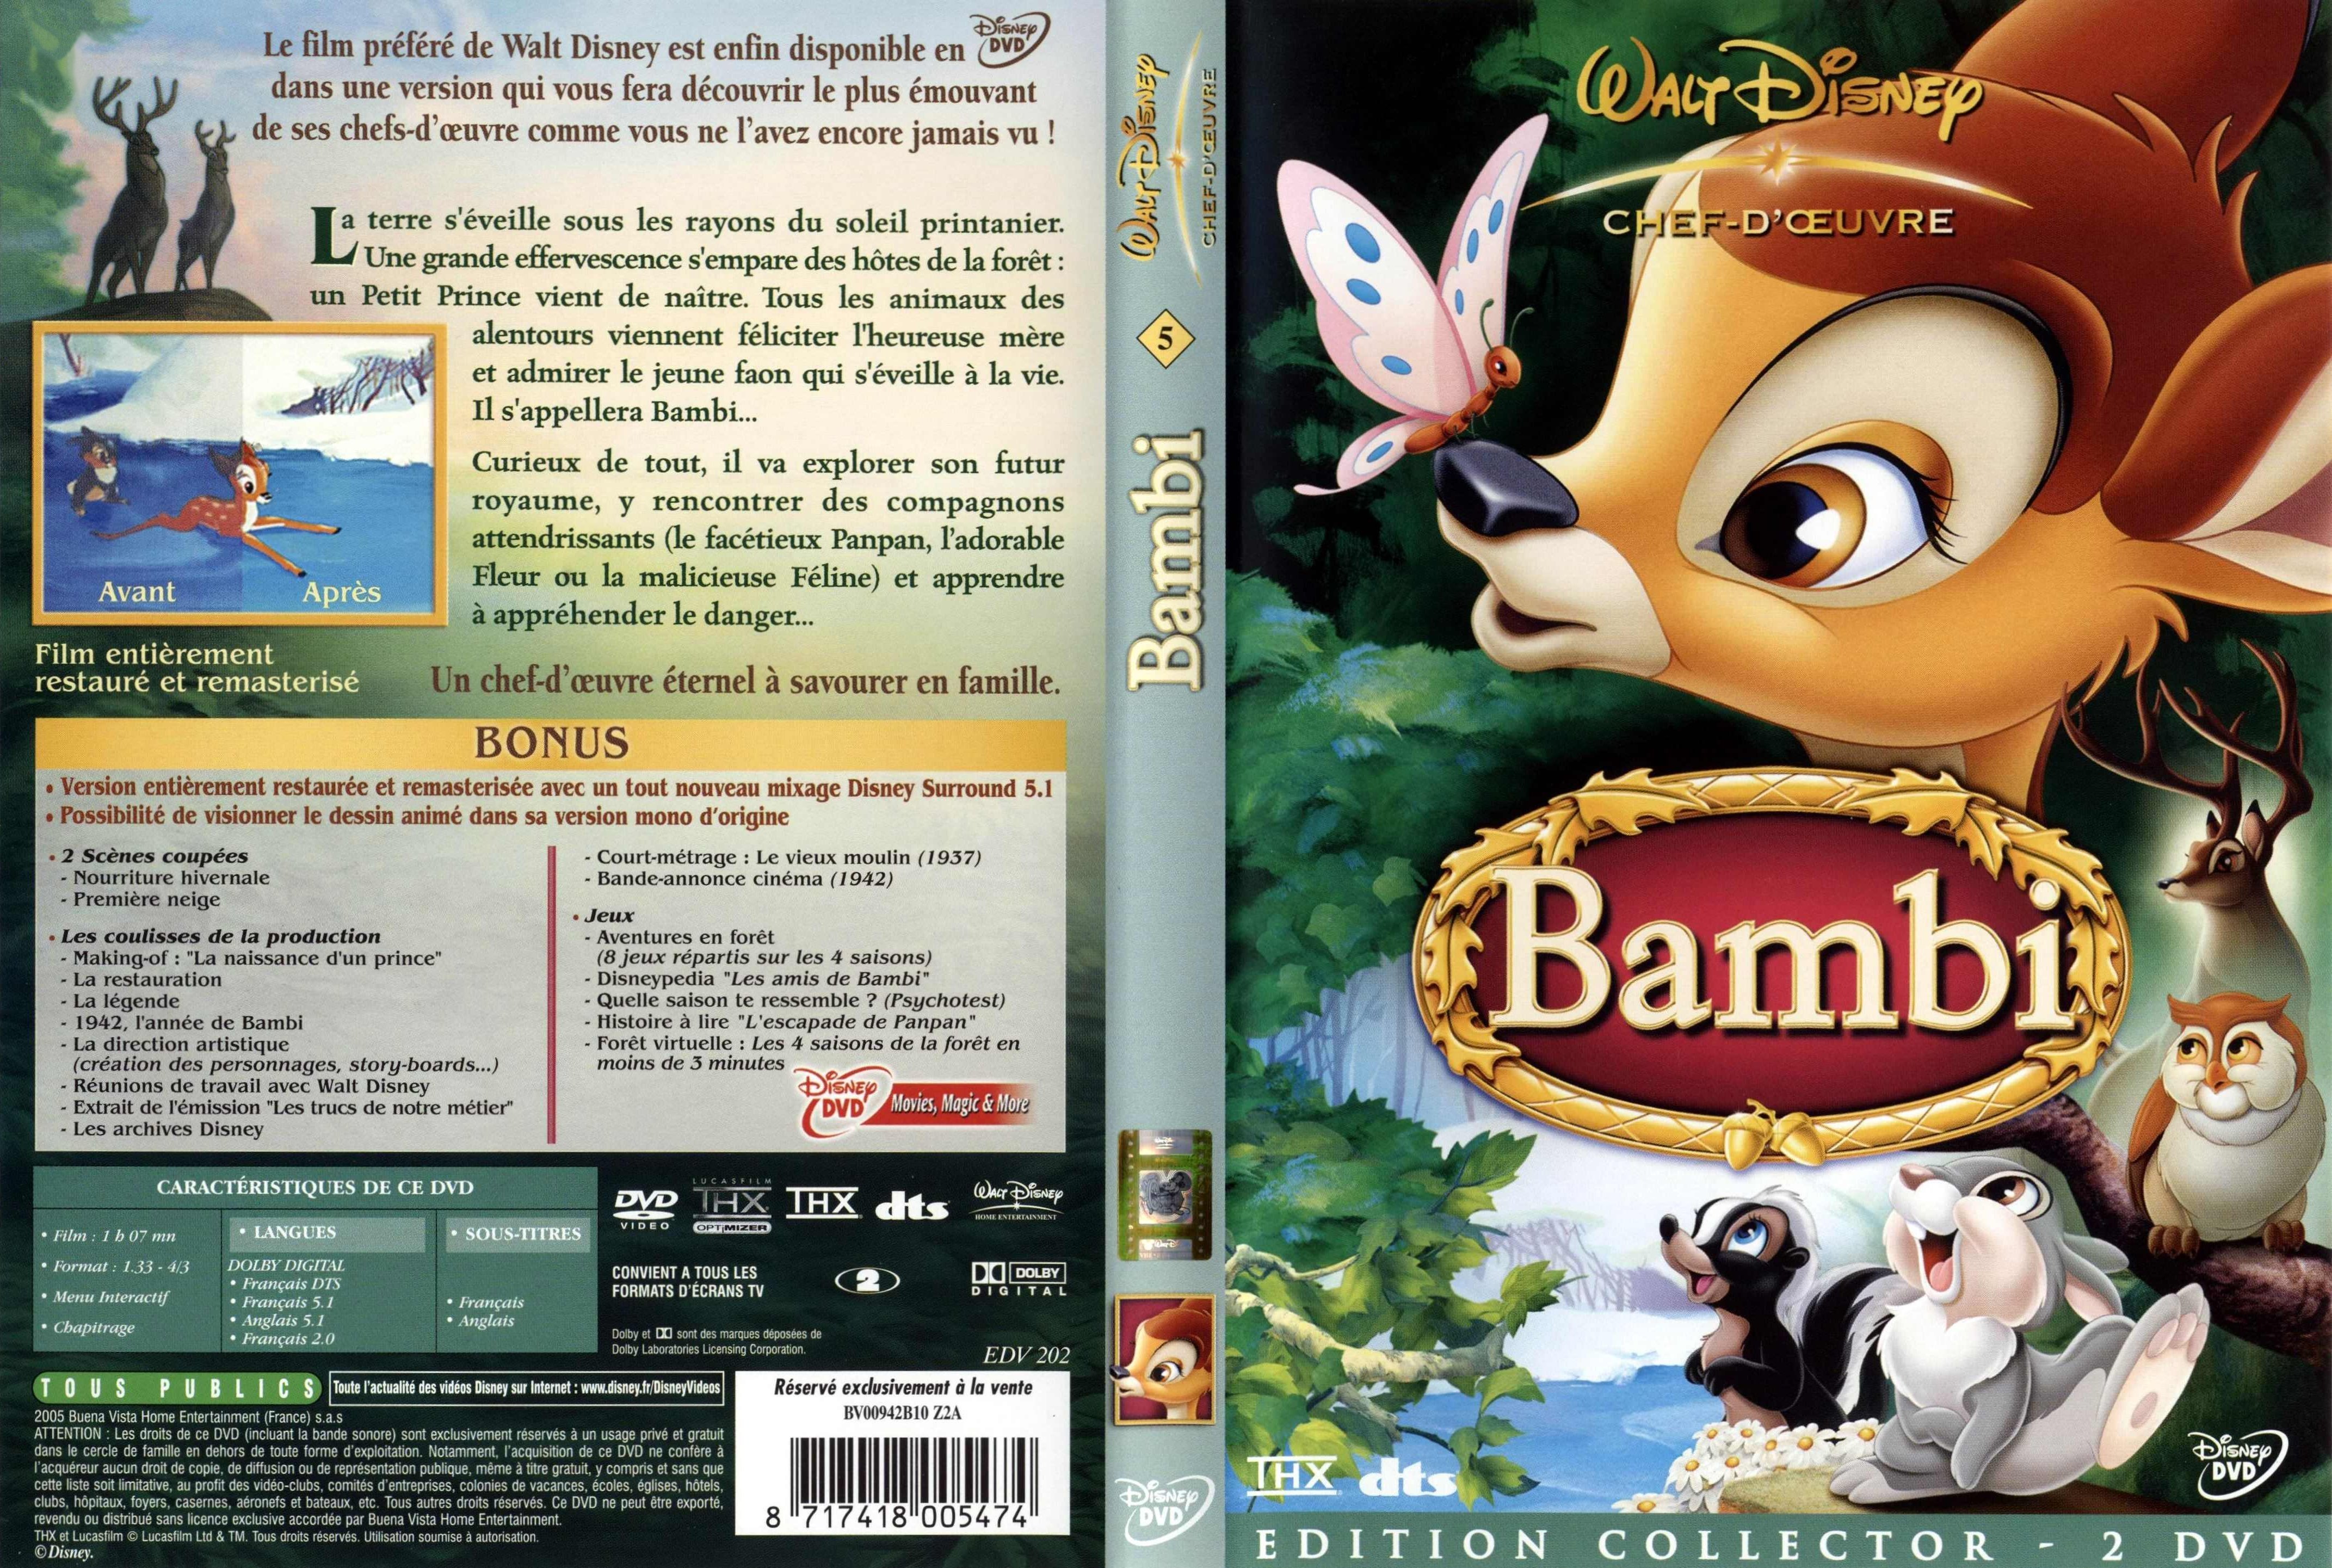 Jaquette DVD Bambi v2